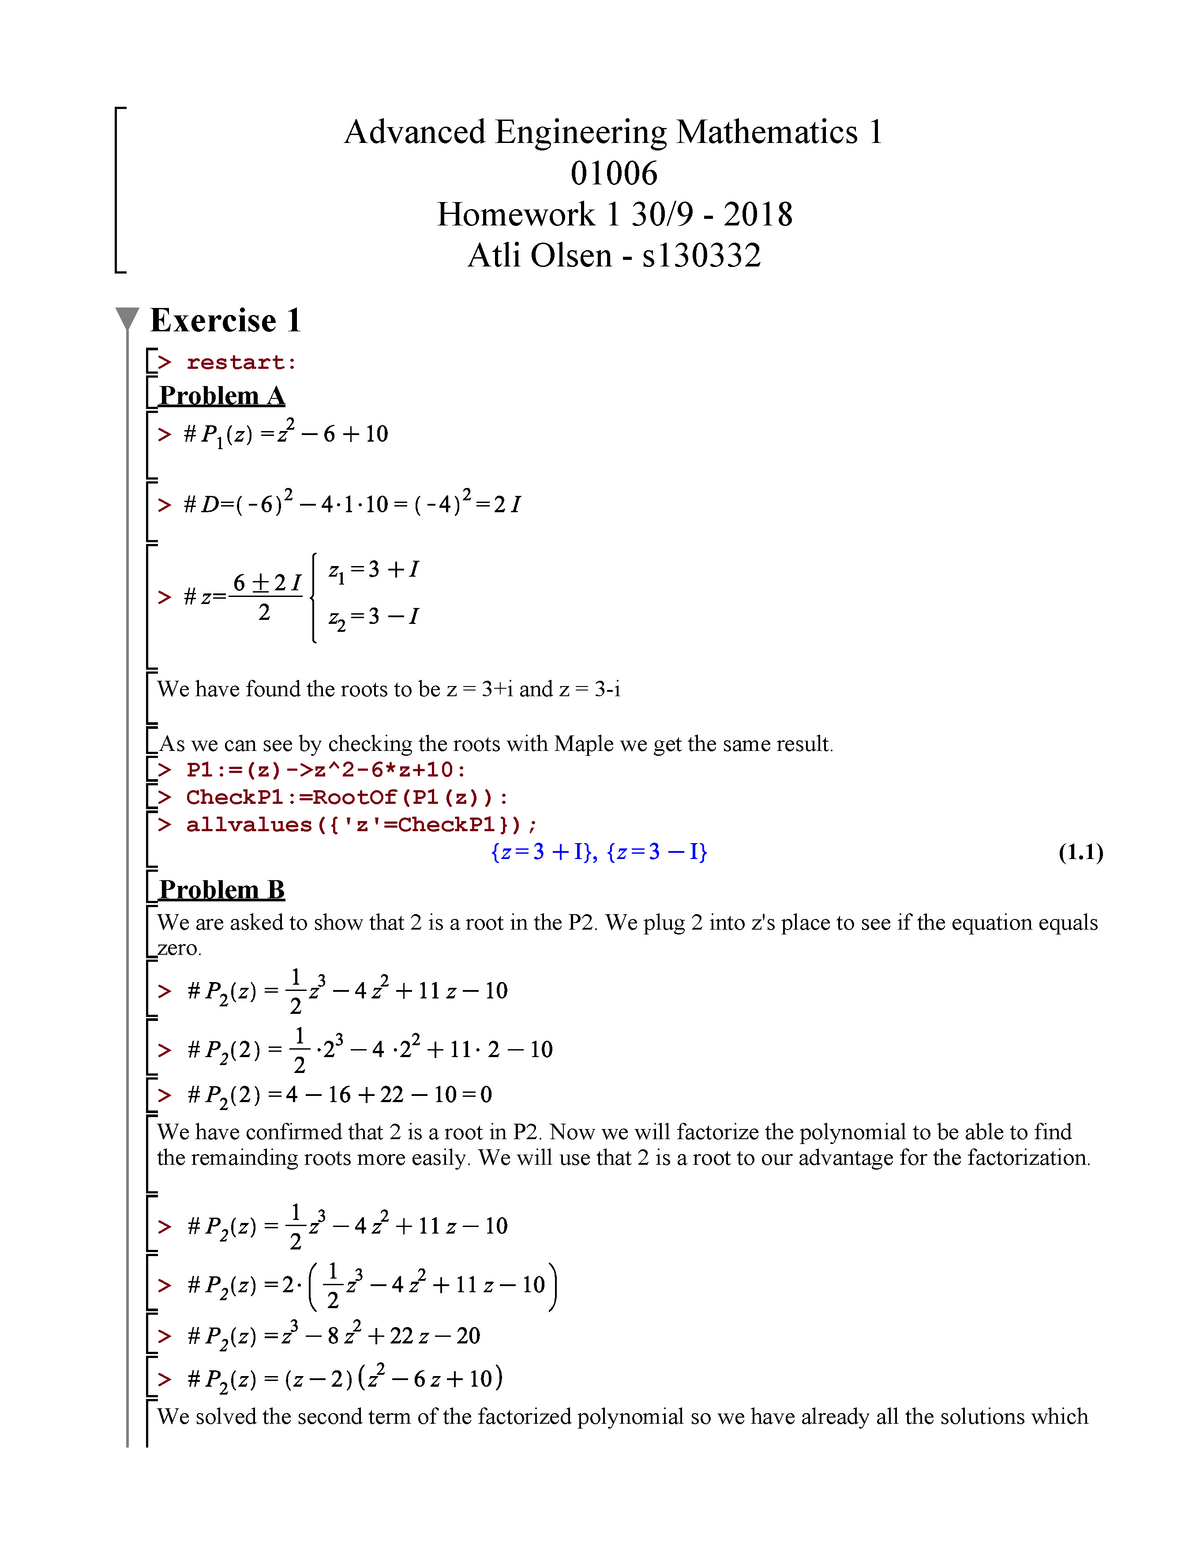 Homework 1 - Advanced Engineering Mathematics 1 01006 Homework 1 